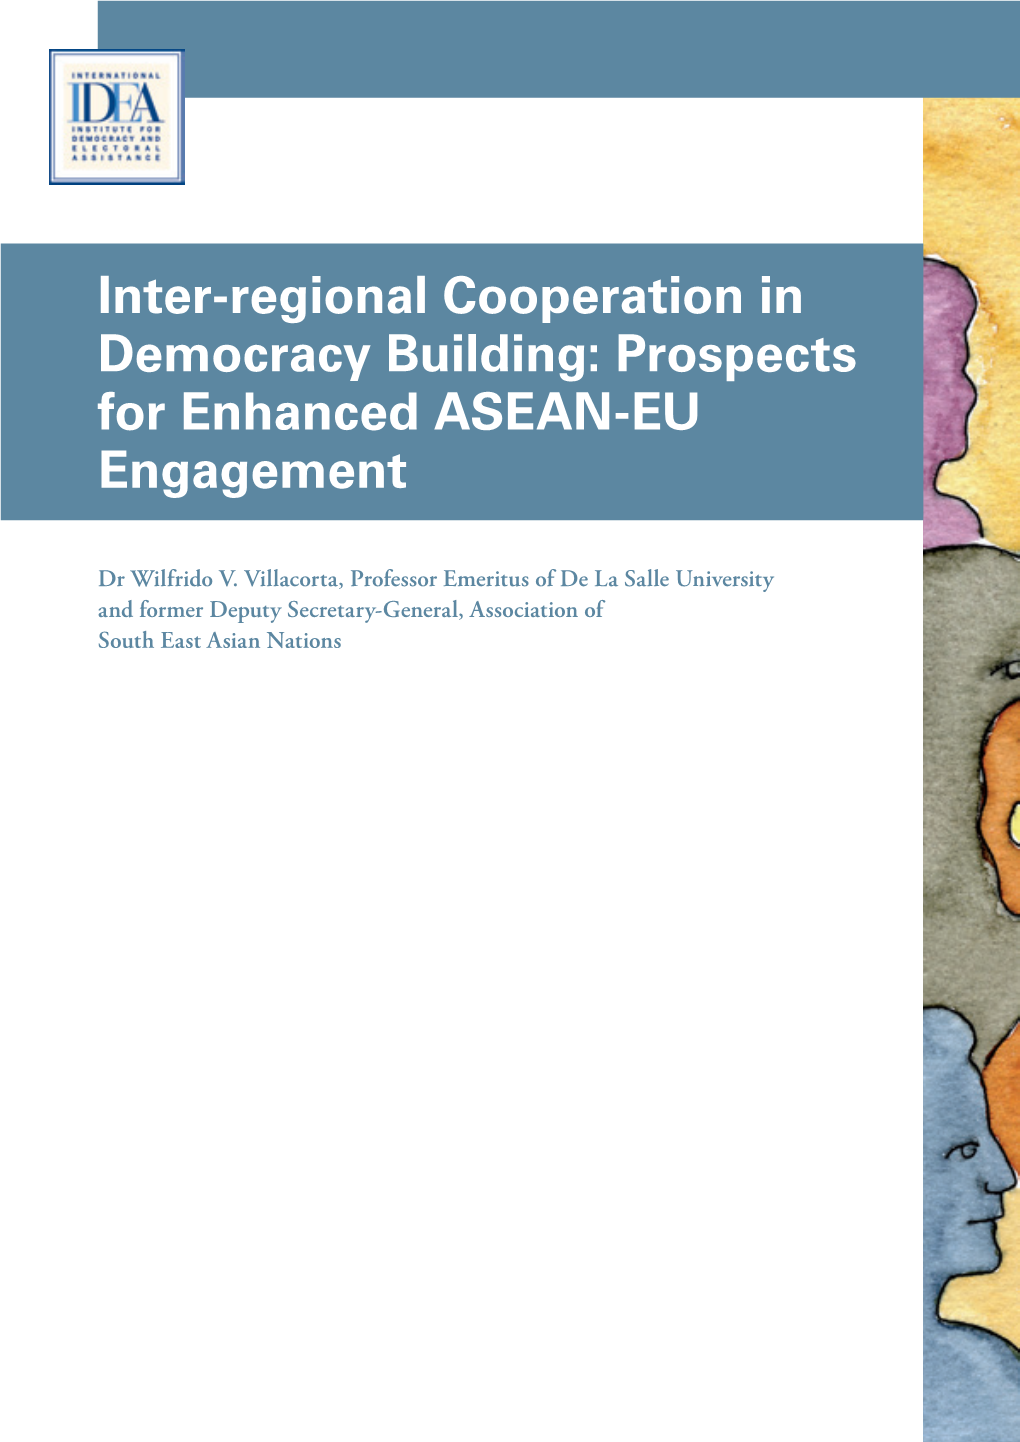 Prospects for Enhanced ASEAN-EU Engagement